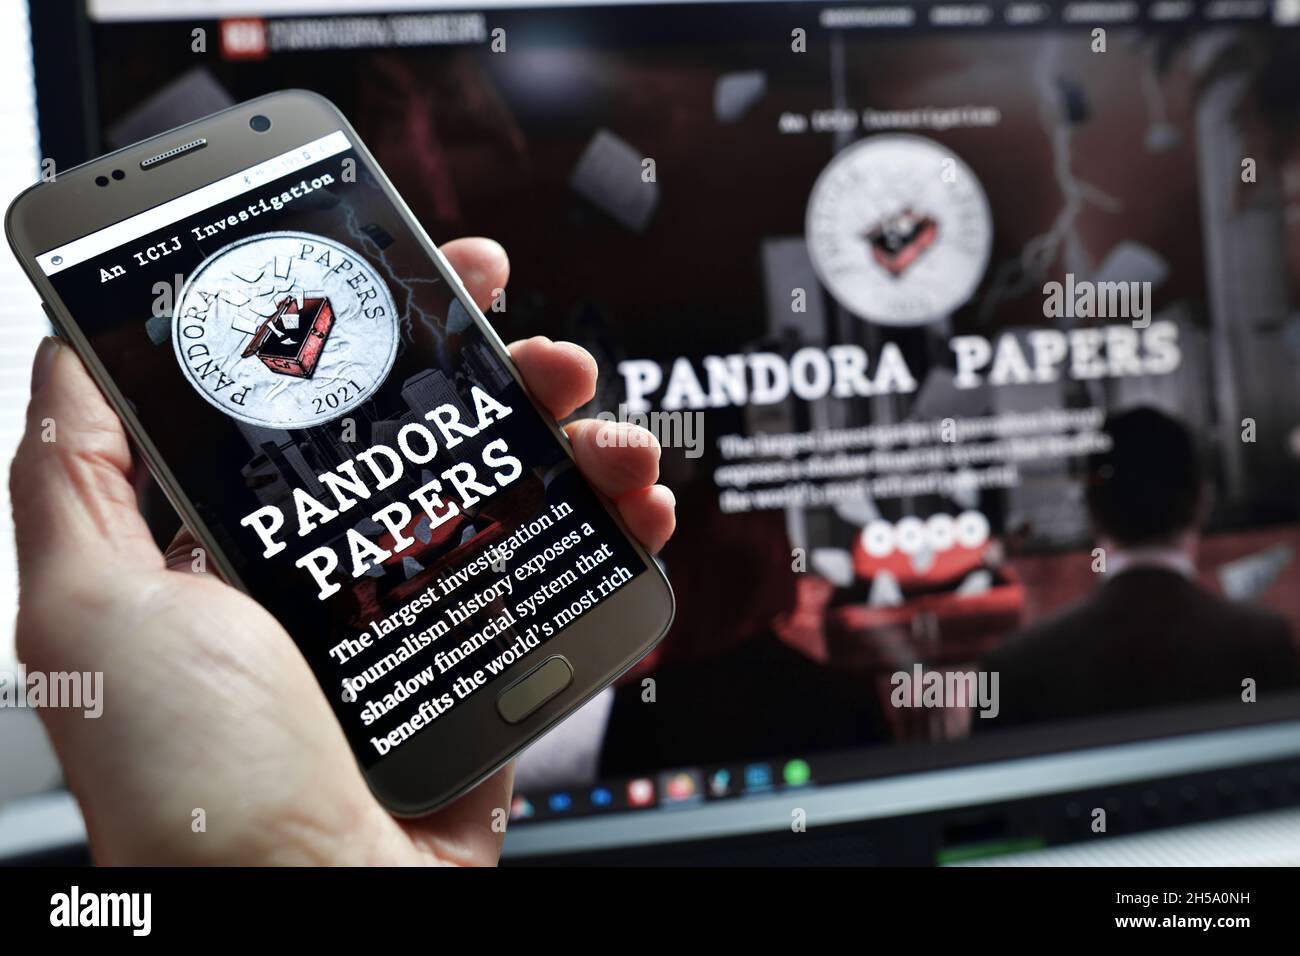 Sitio web von ICIJ mit den Pandora Papers Enthüllungen Foto de stock